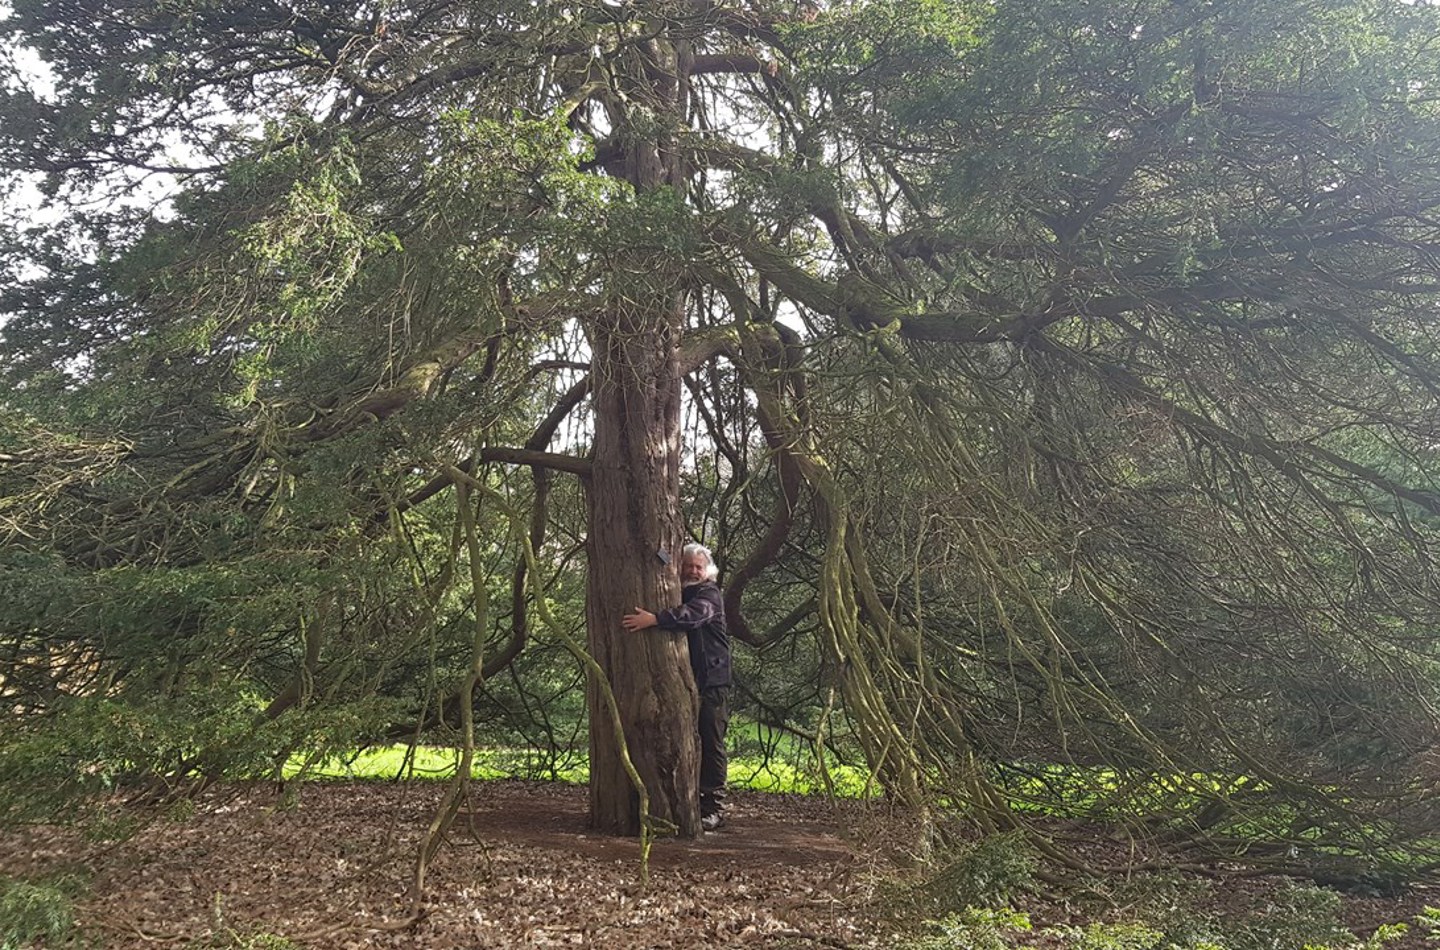 David hugs large tree